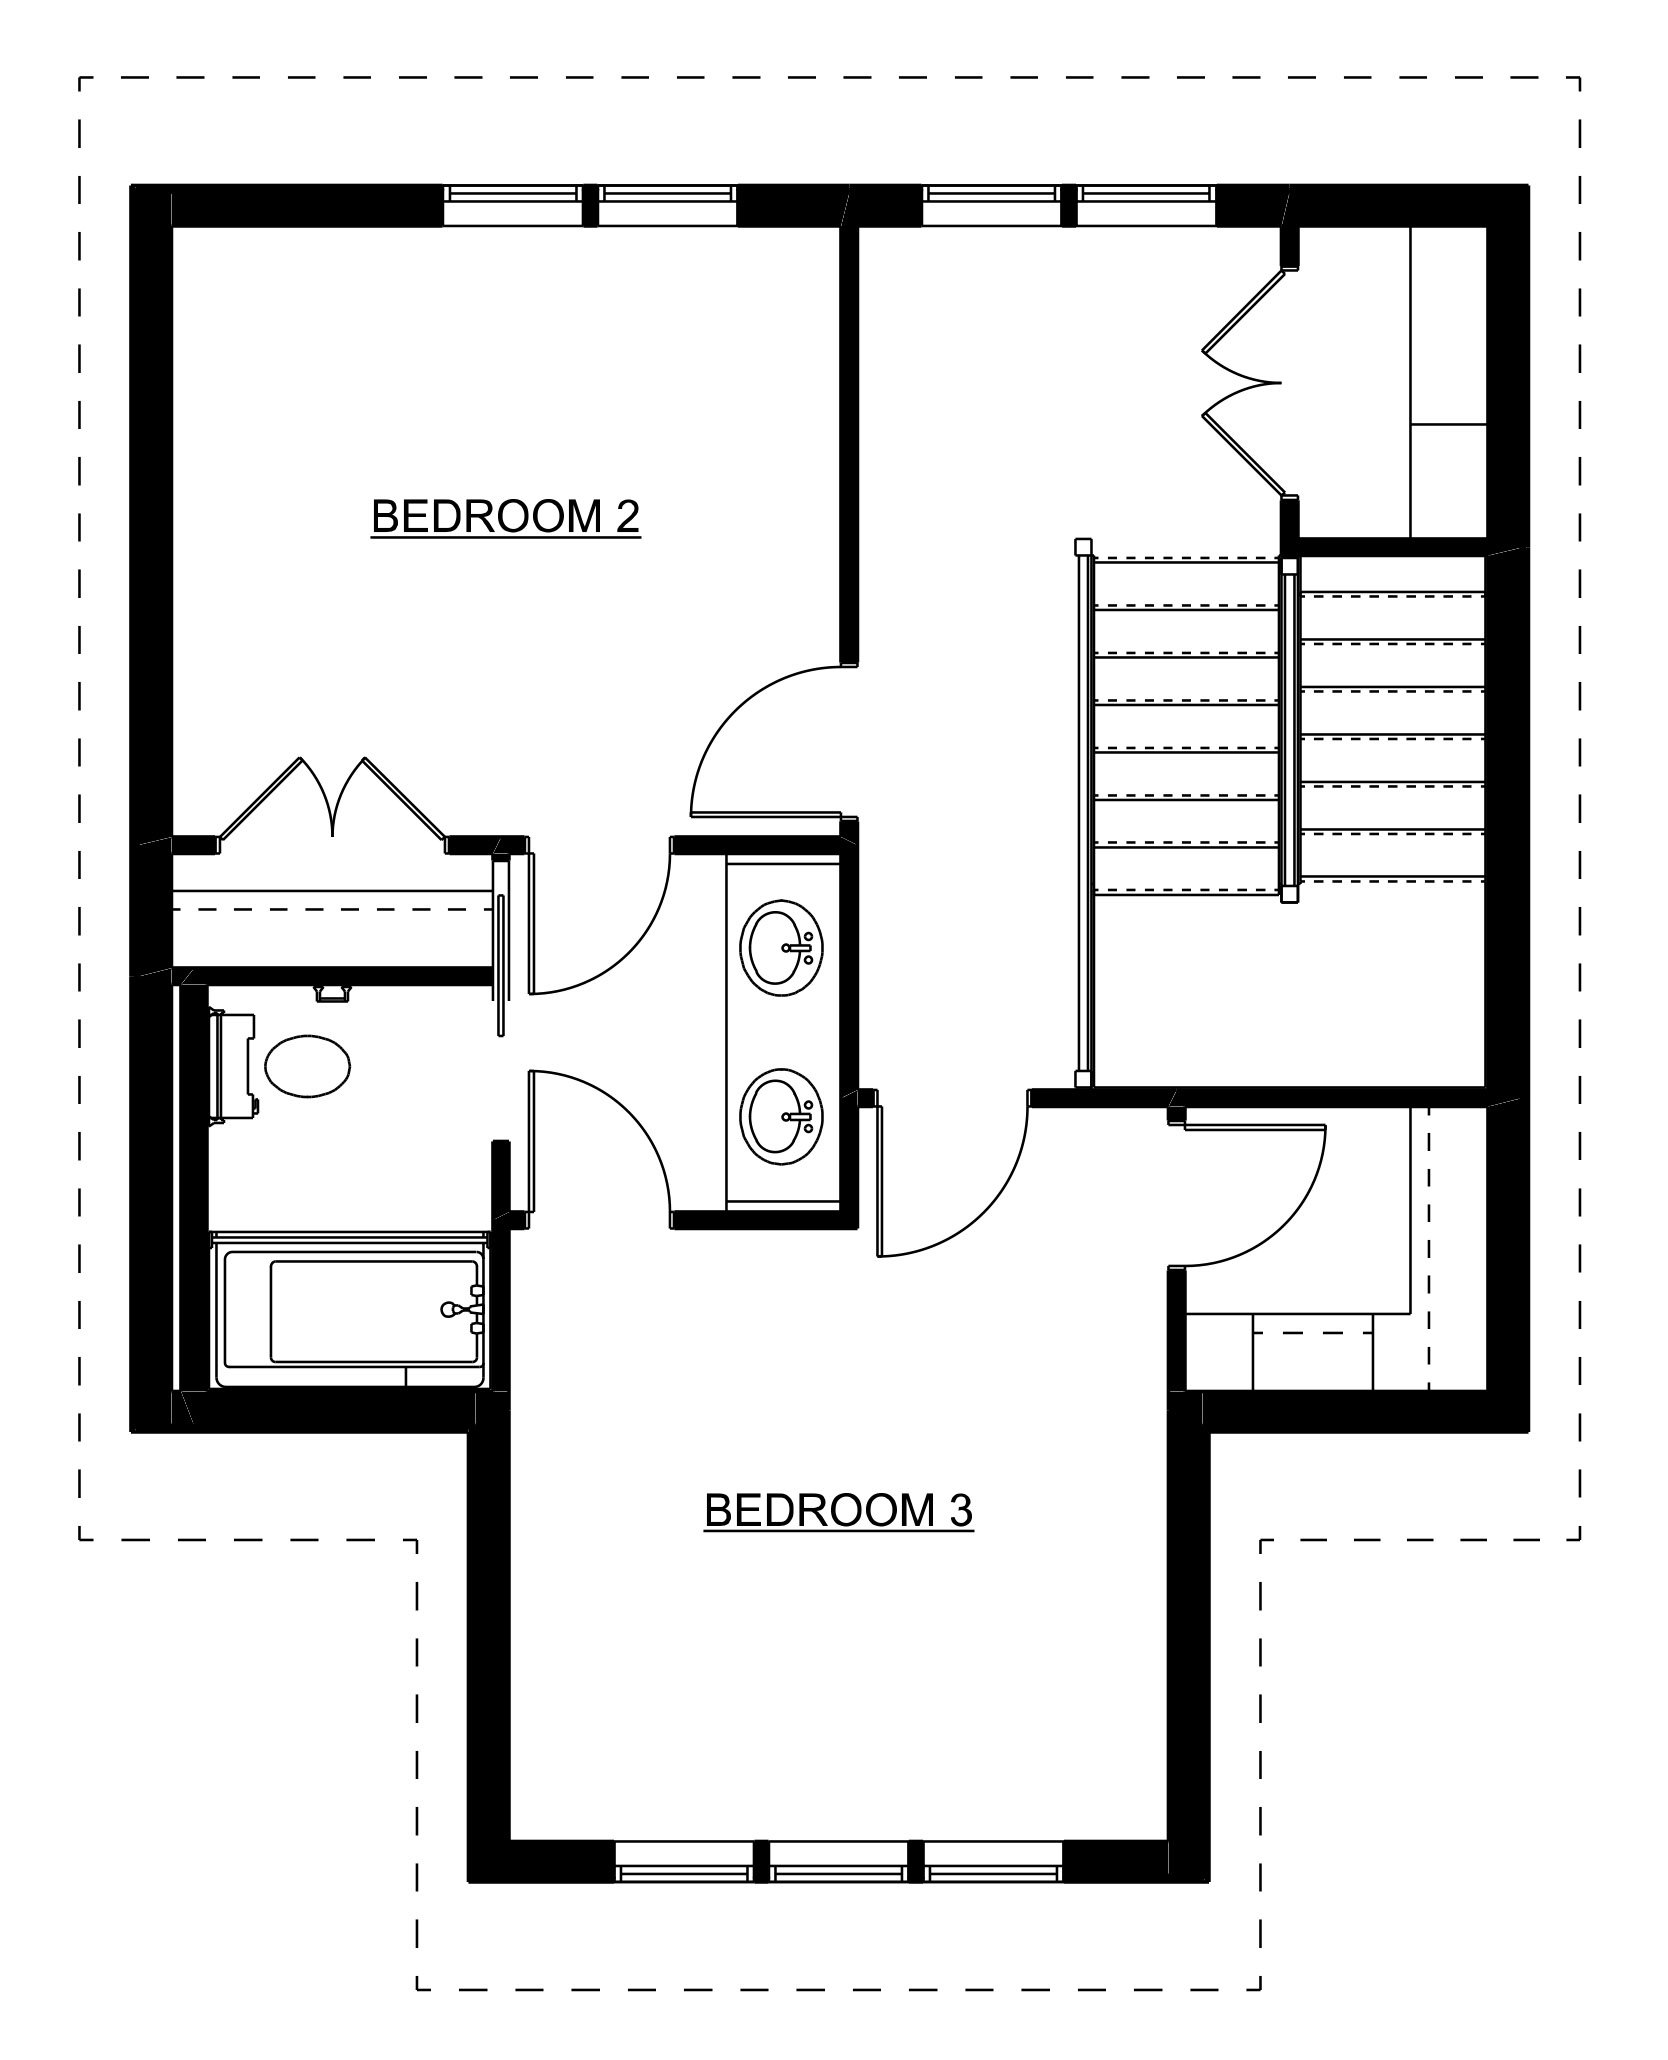 nelson homes modular alberta ready to move floor plans alberta.jpg